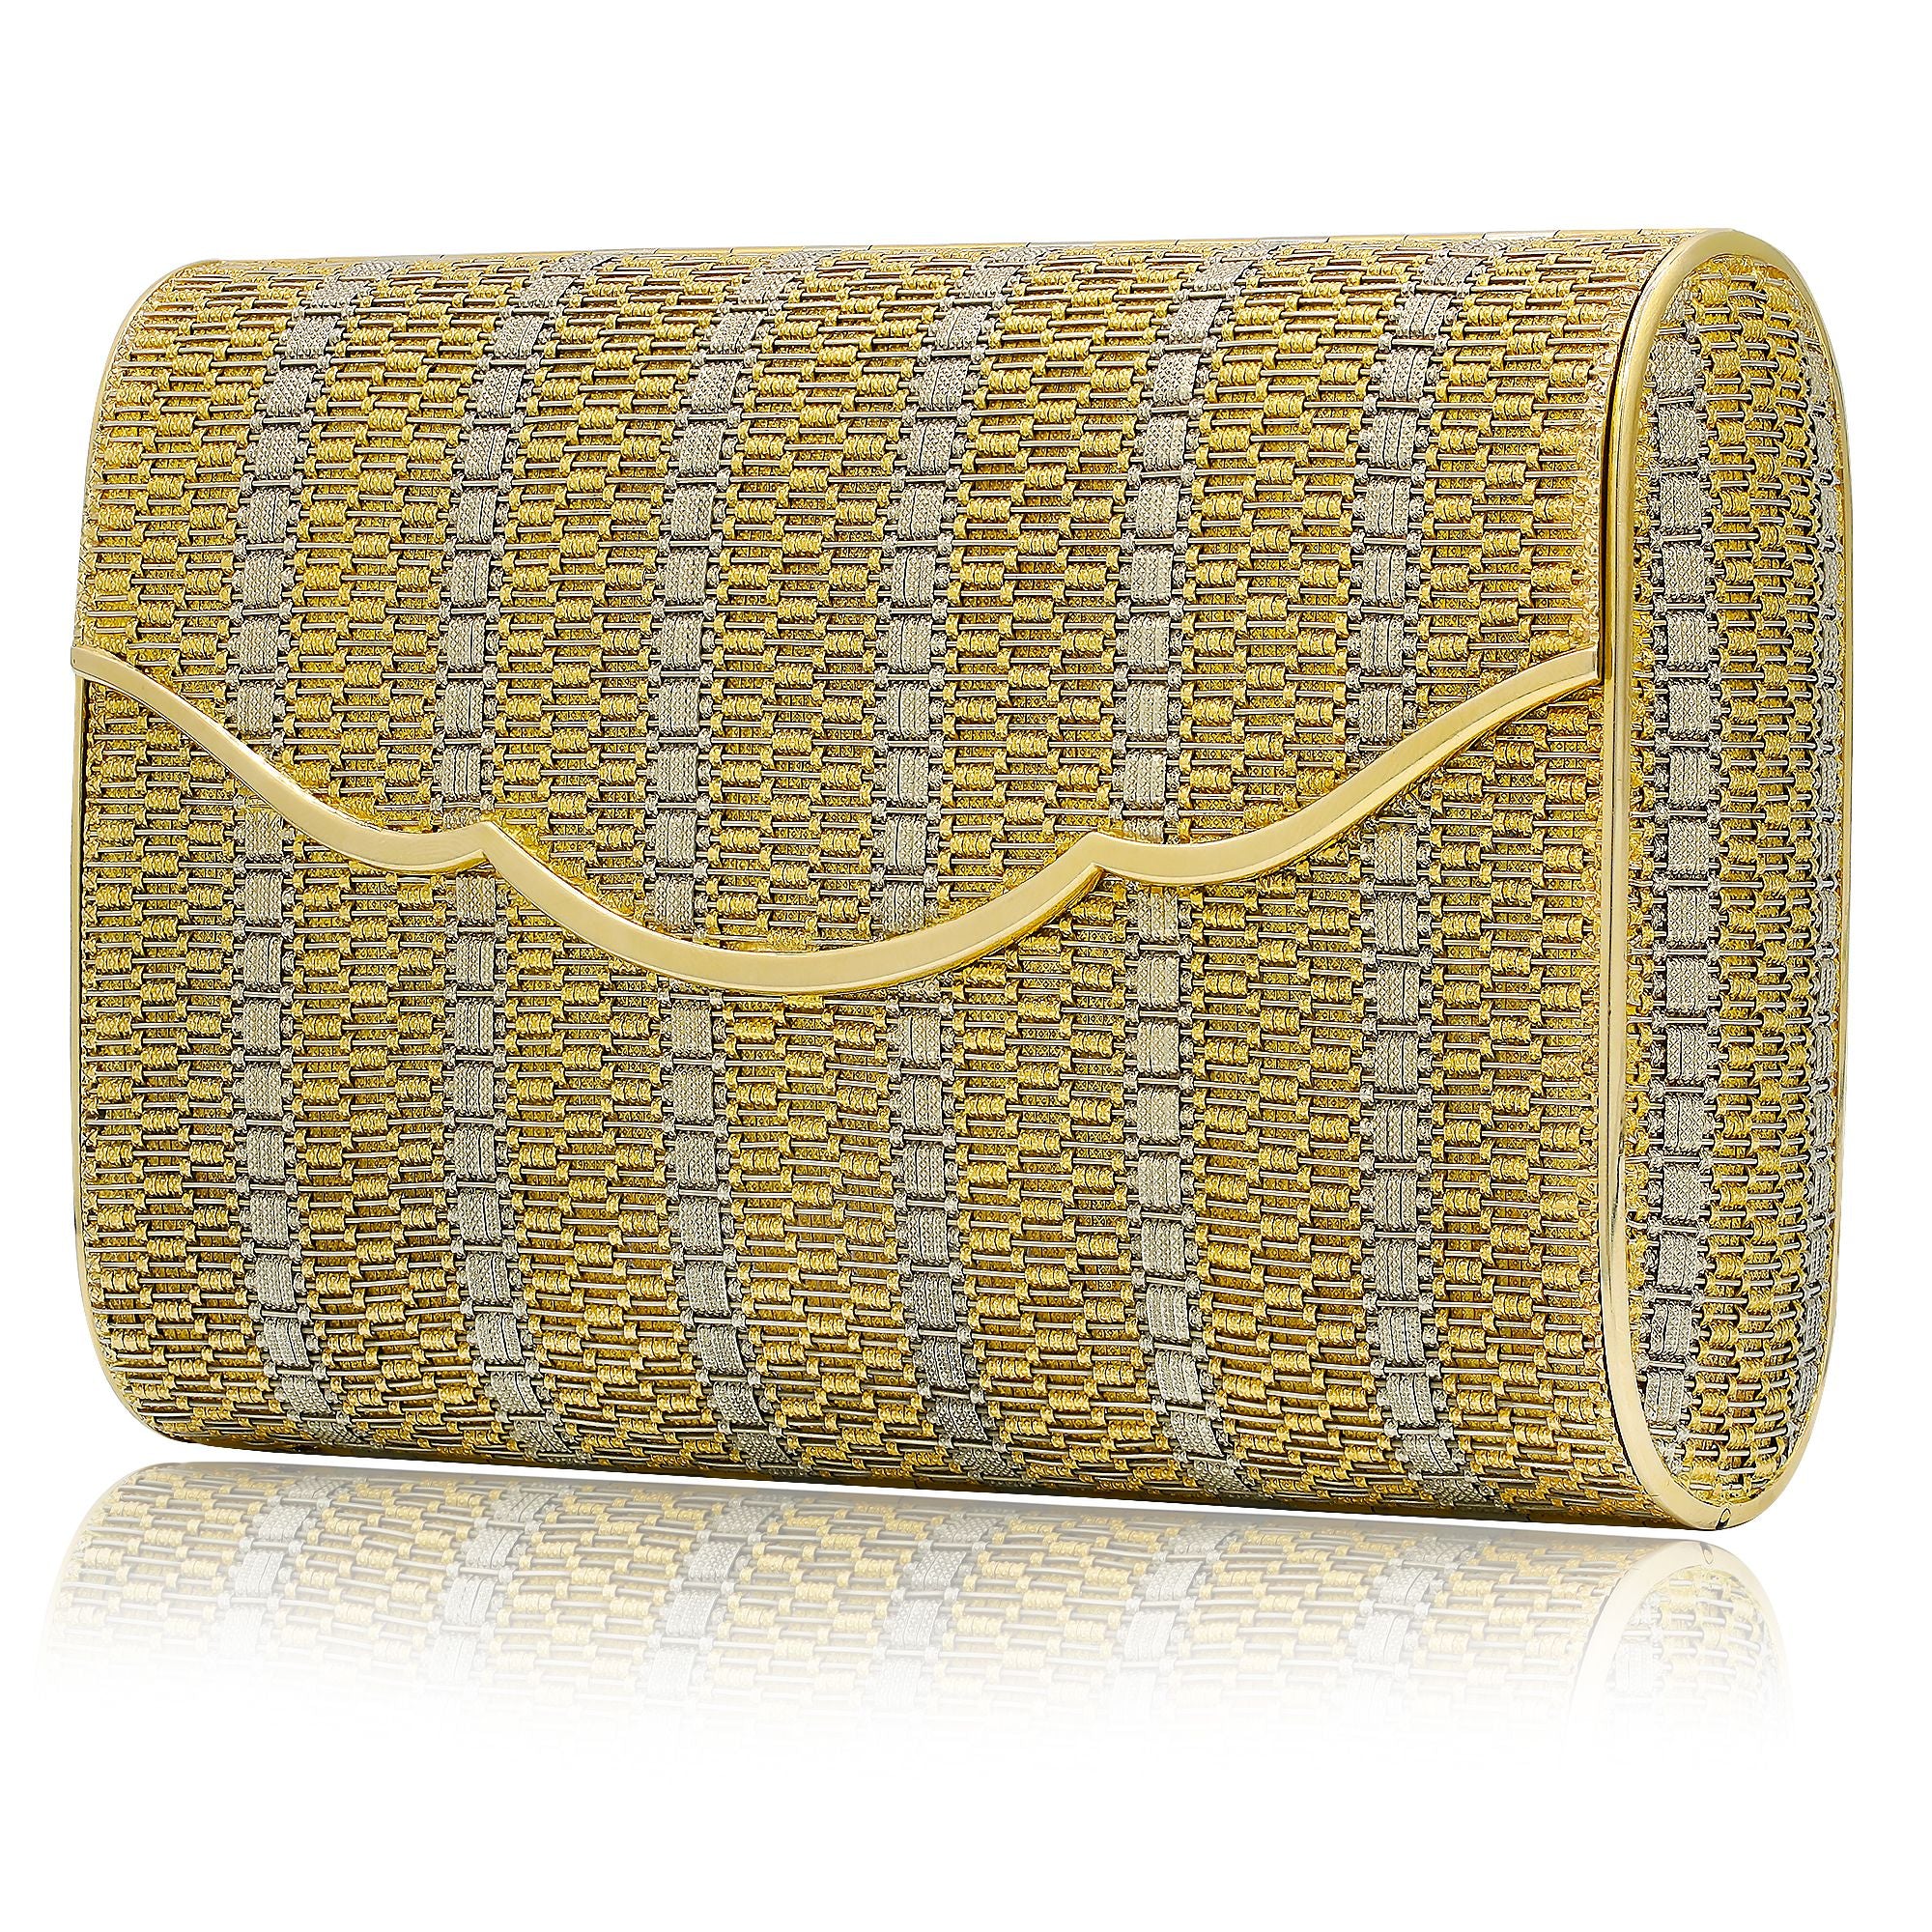 gold clutch purse evening